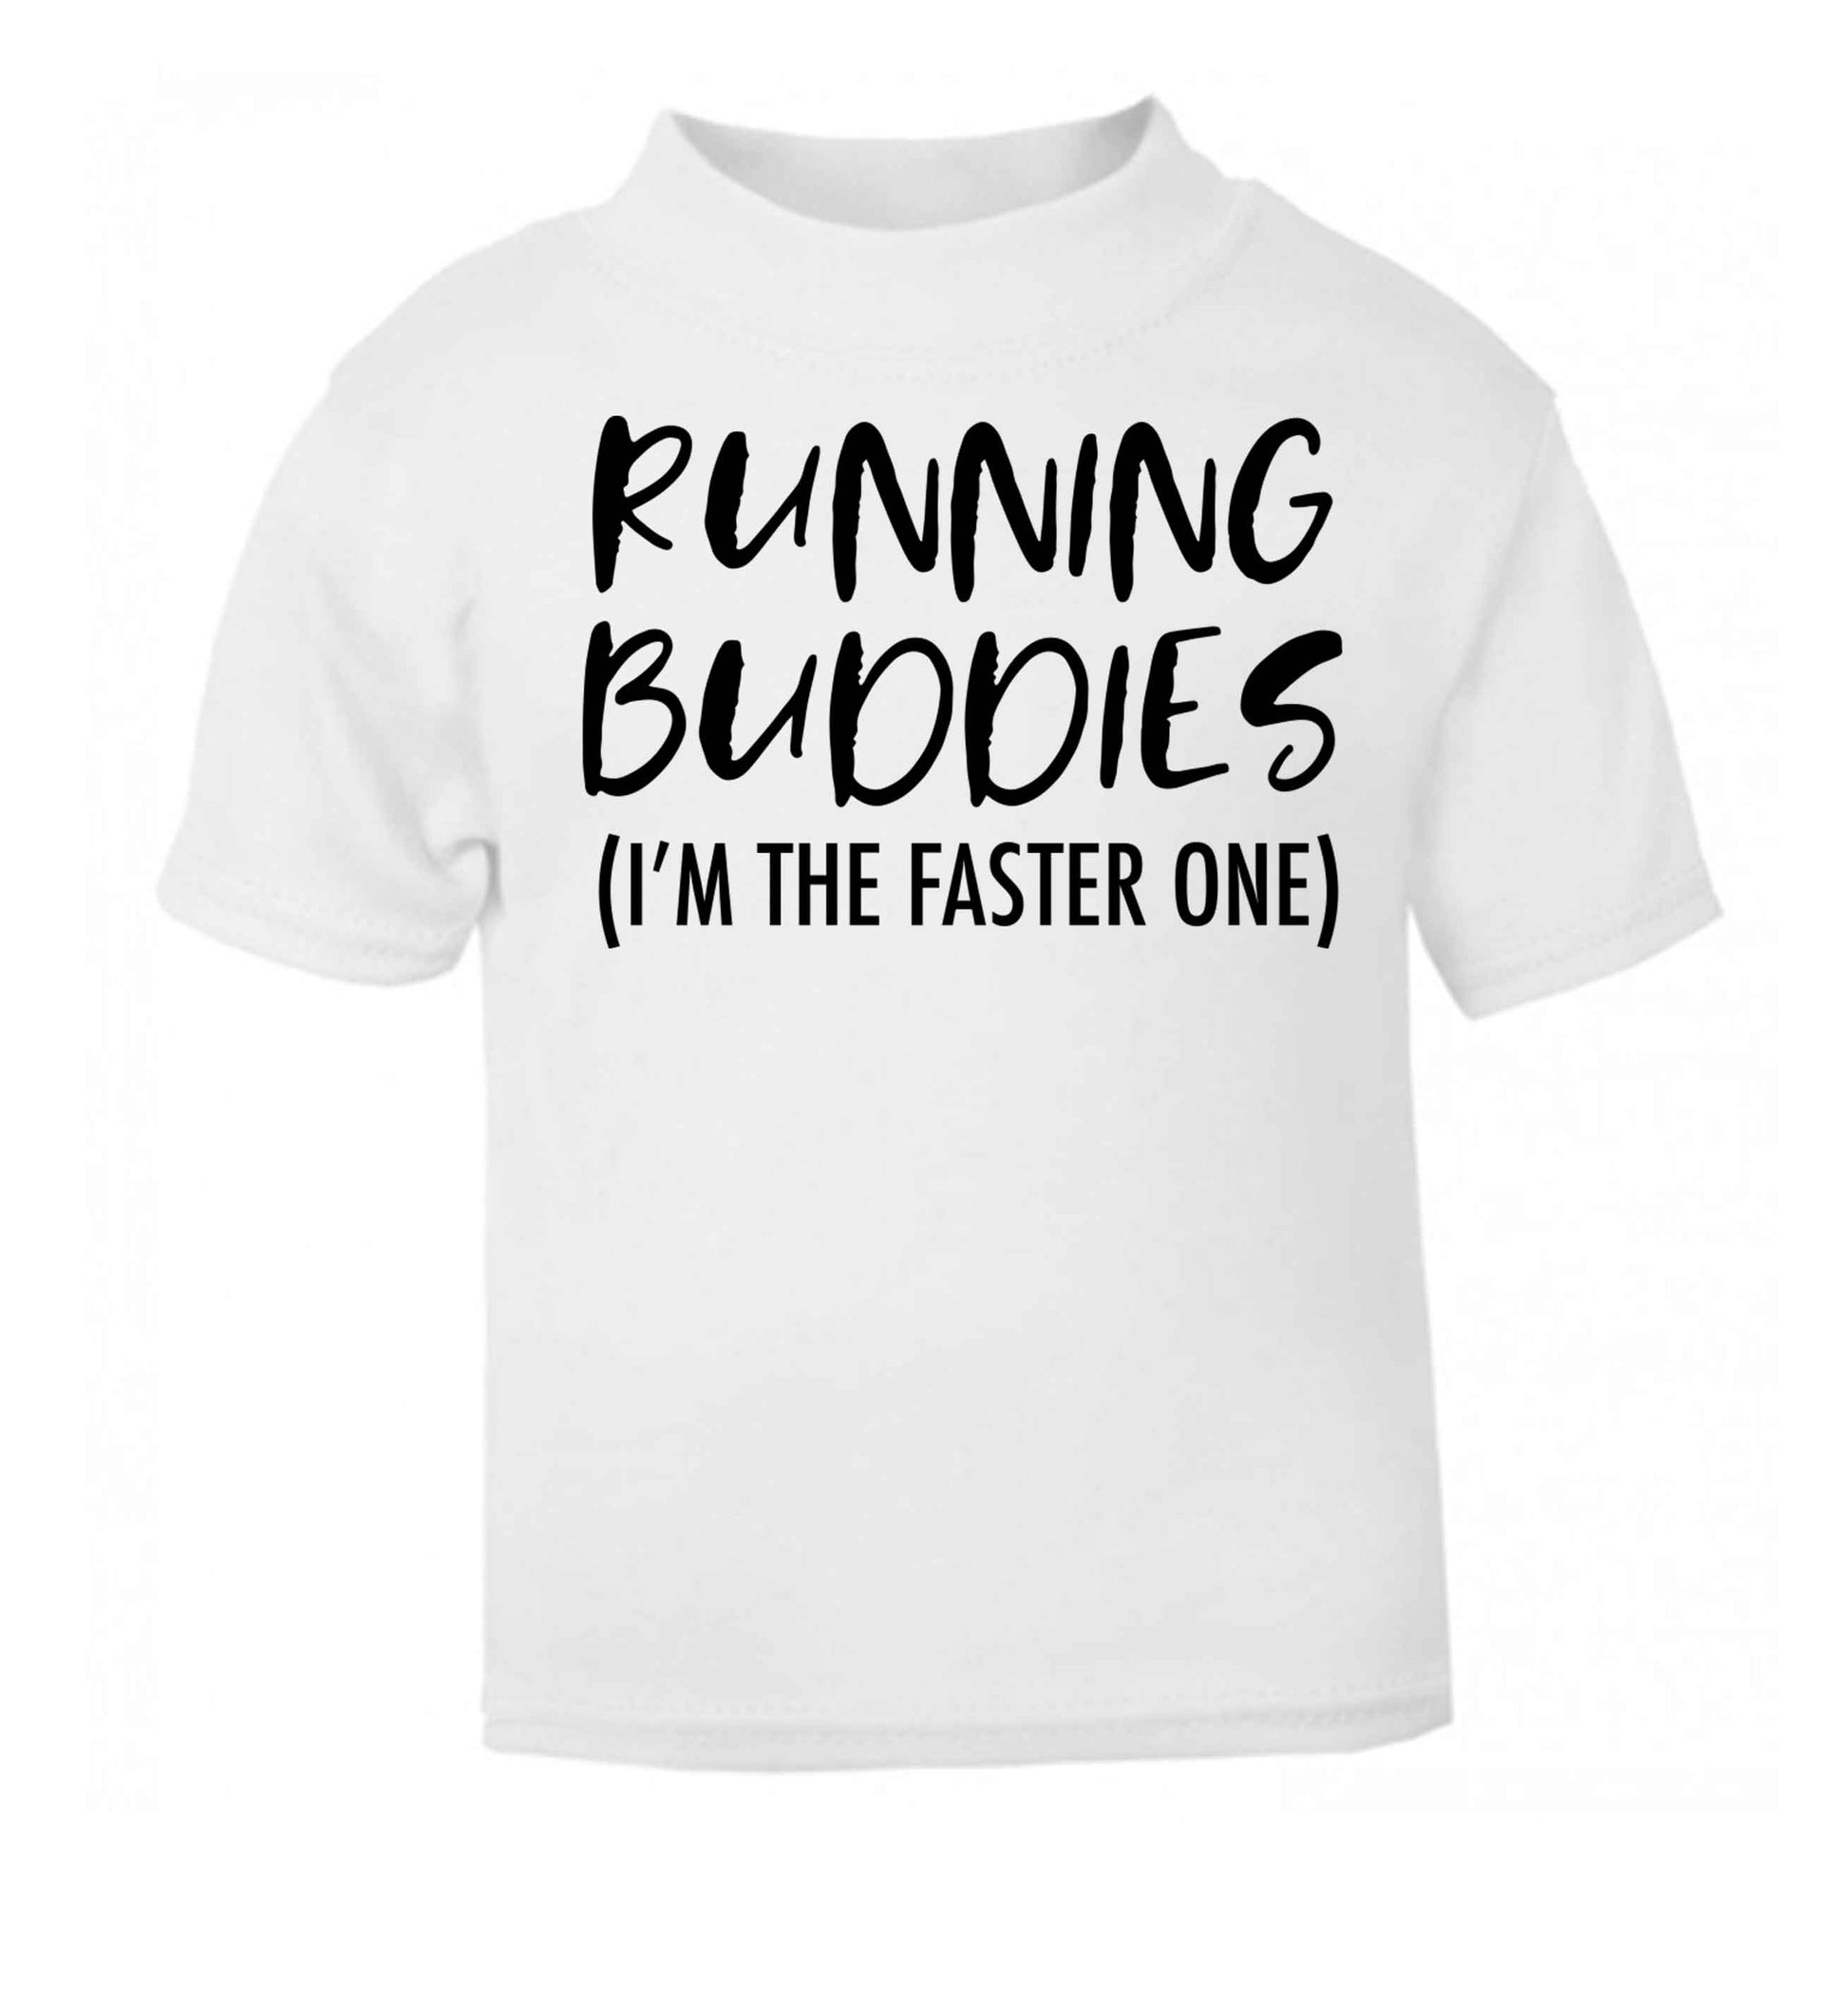 Running buddies (I'm the faster one) white baby toddler Tshirt 2 Years